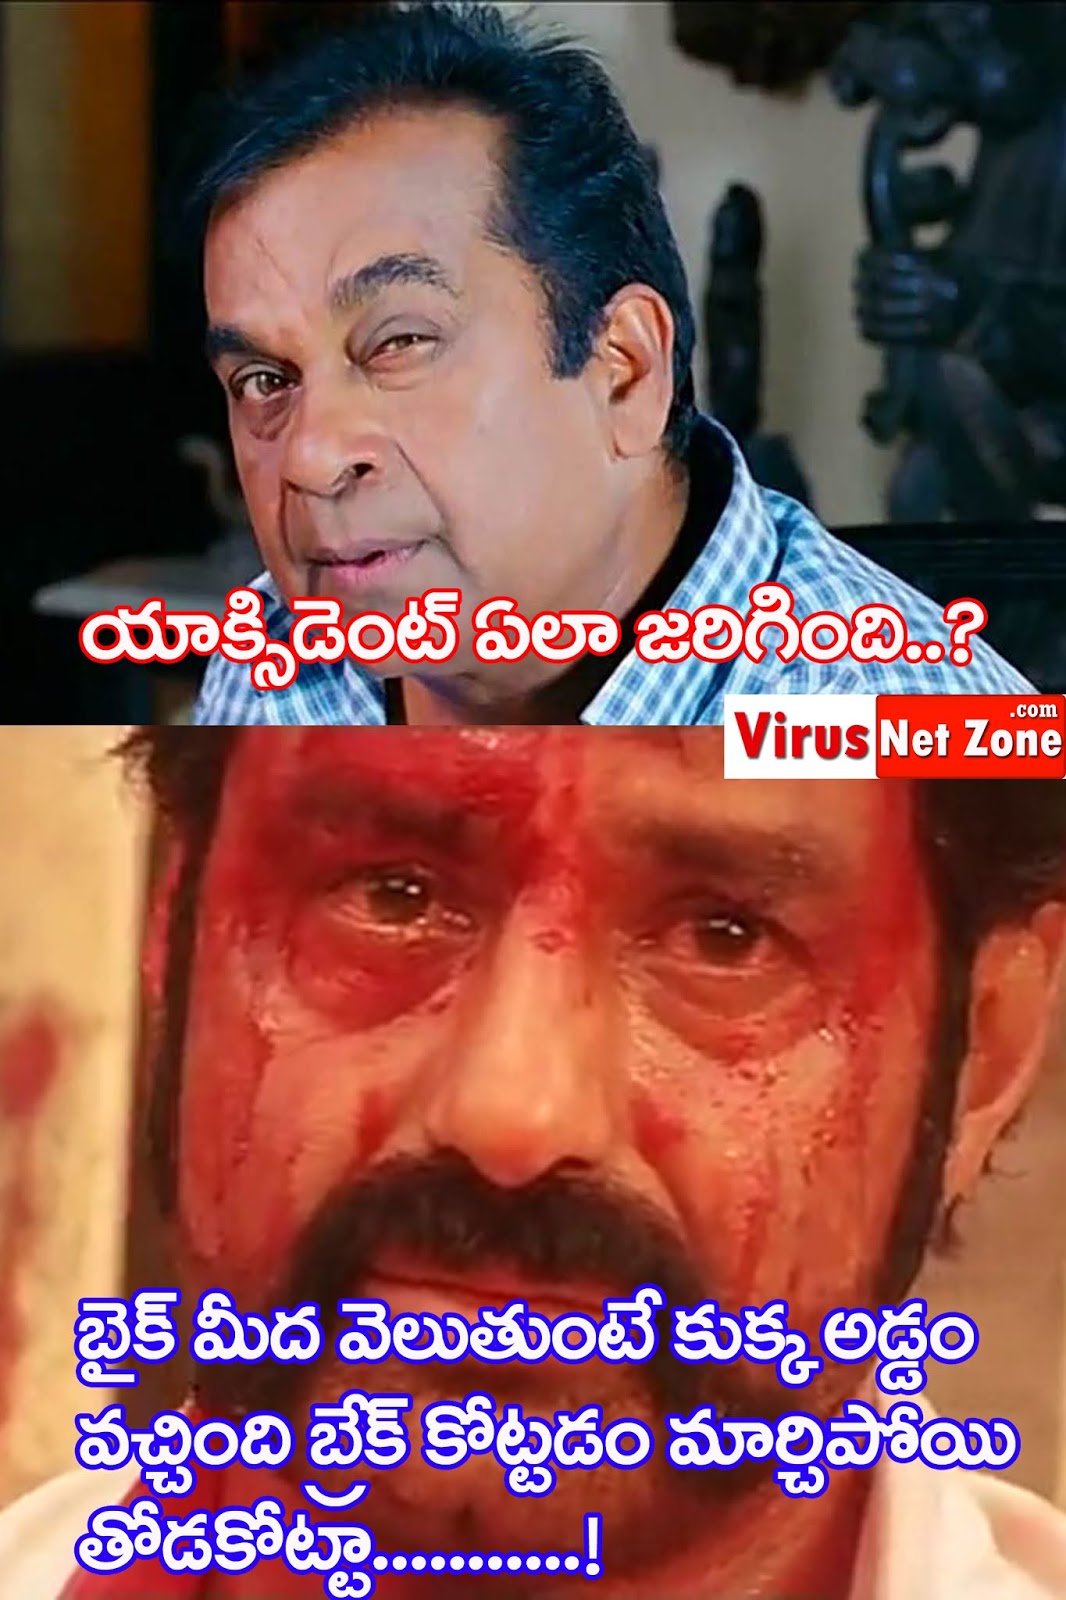 Telugu funny jokes on balakrisha and brahmanandam - Virus Net Zone